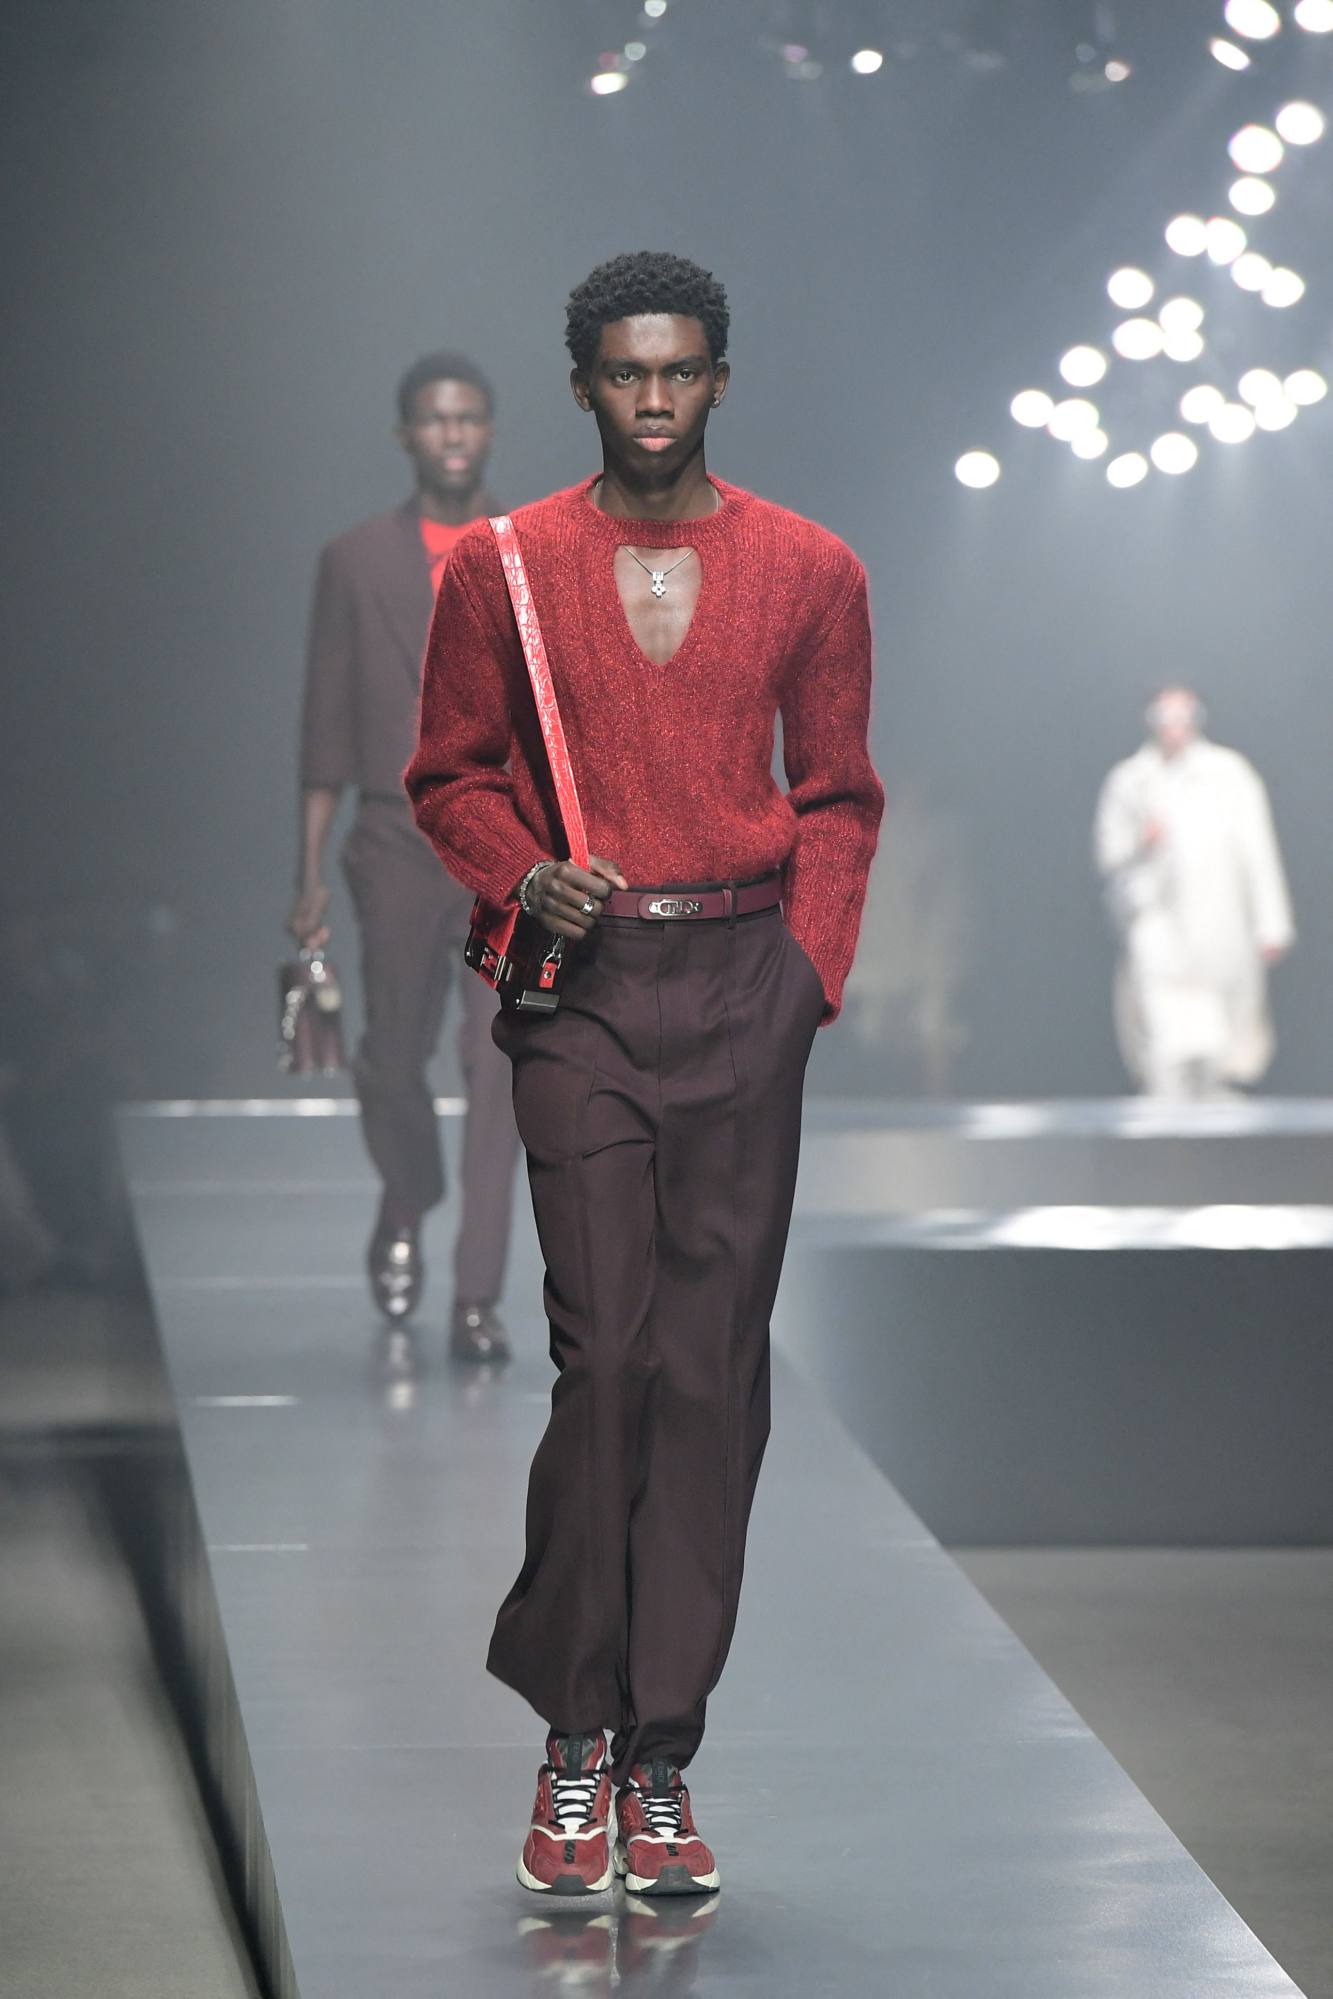 MILAN - JANUARY 15: Man with orange shirt and red Louis Vuitton